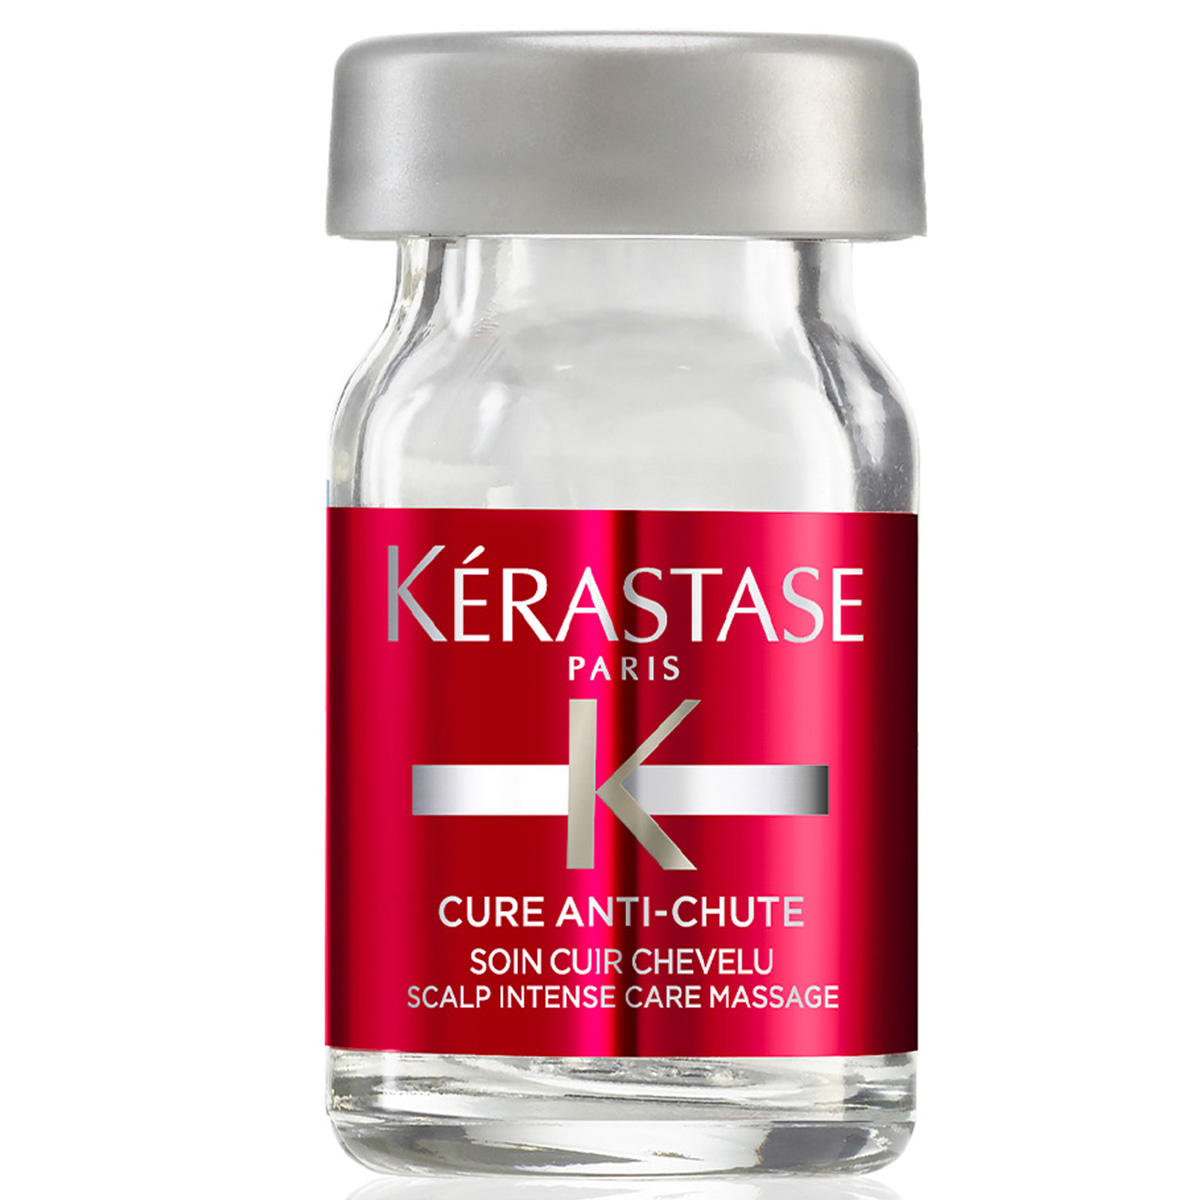 Kérastase Spécifique Cure Anti-Chute Confezione con 42 x 6 ml